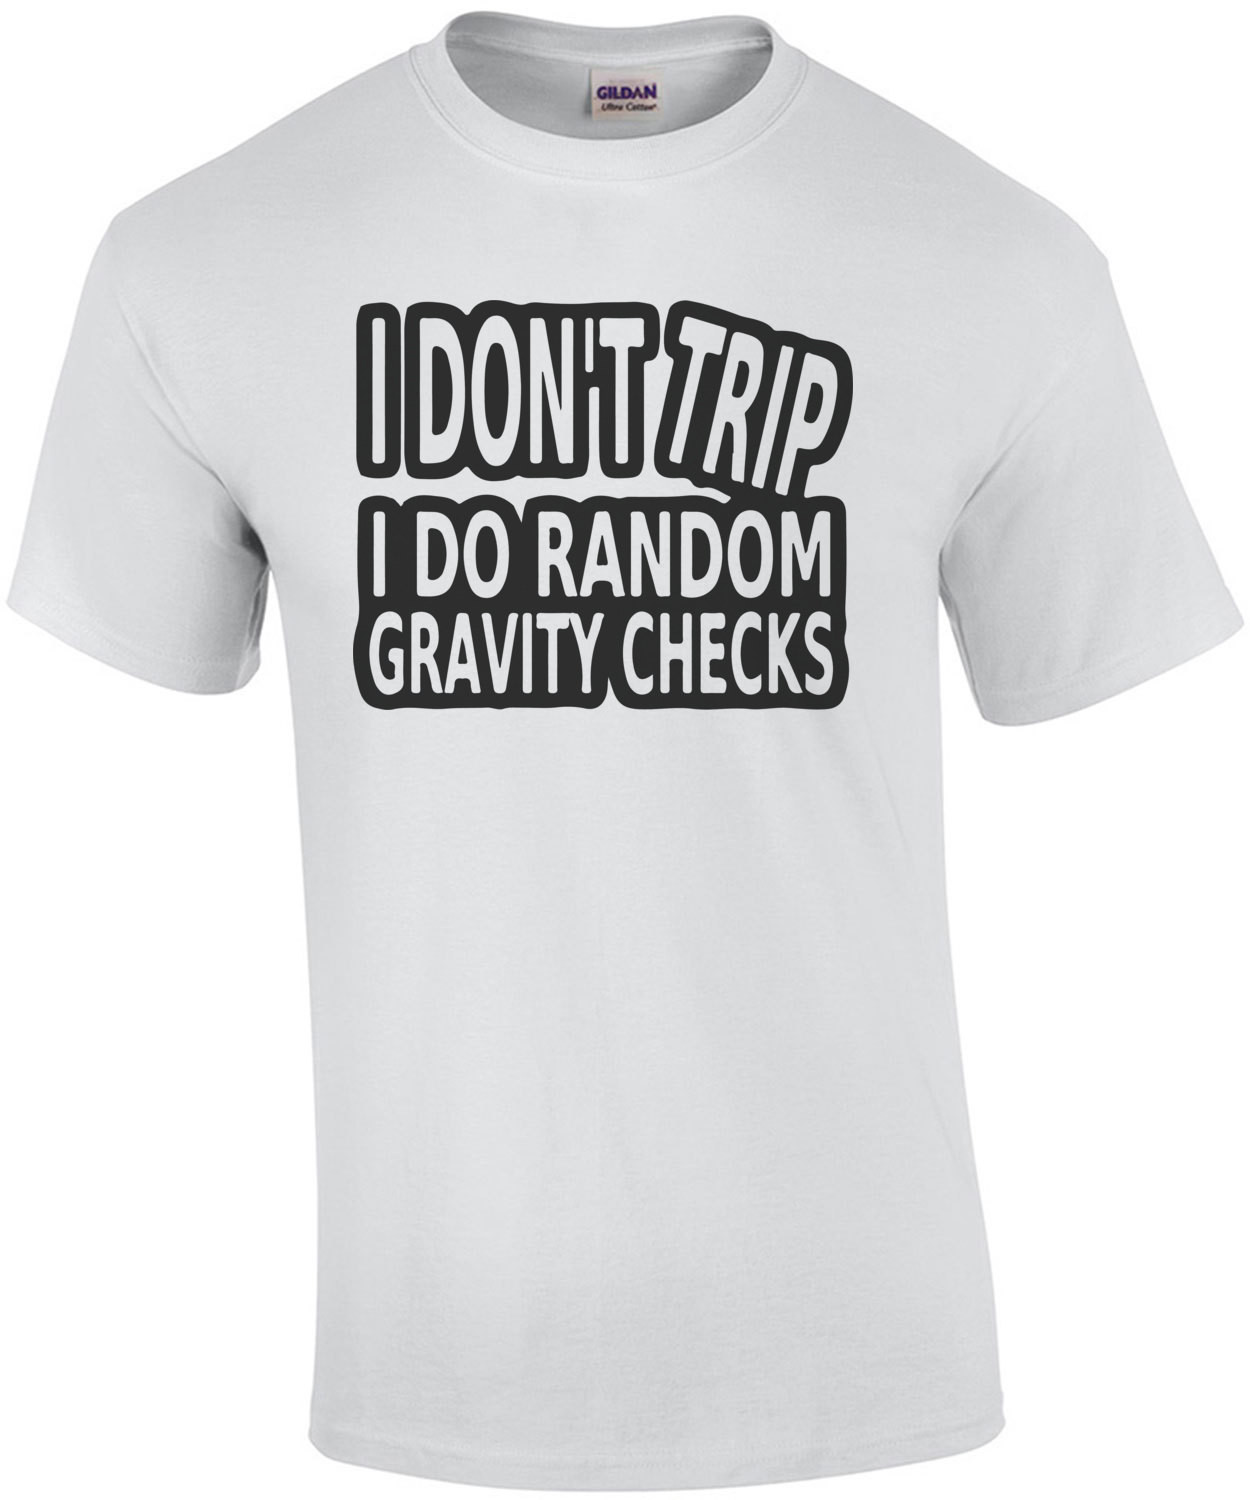 I don't trip I do random gravity checks